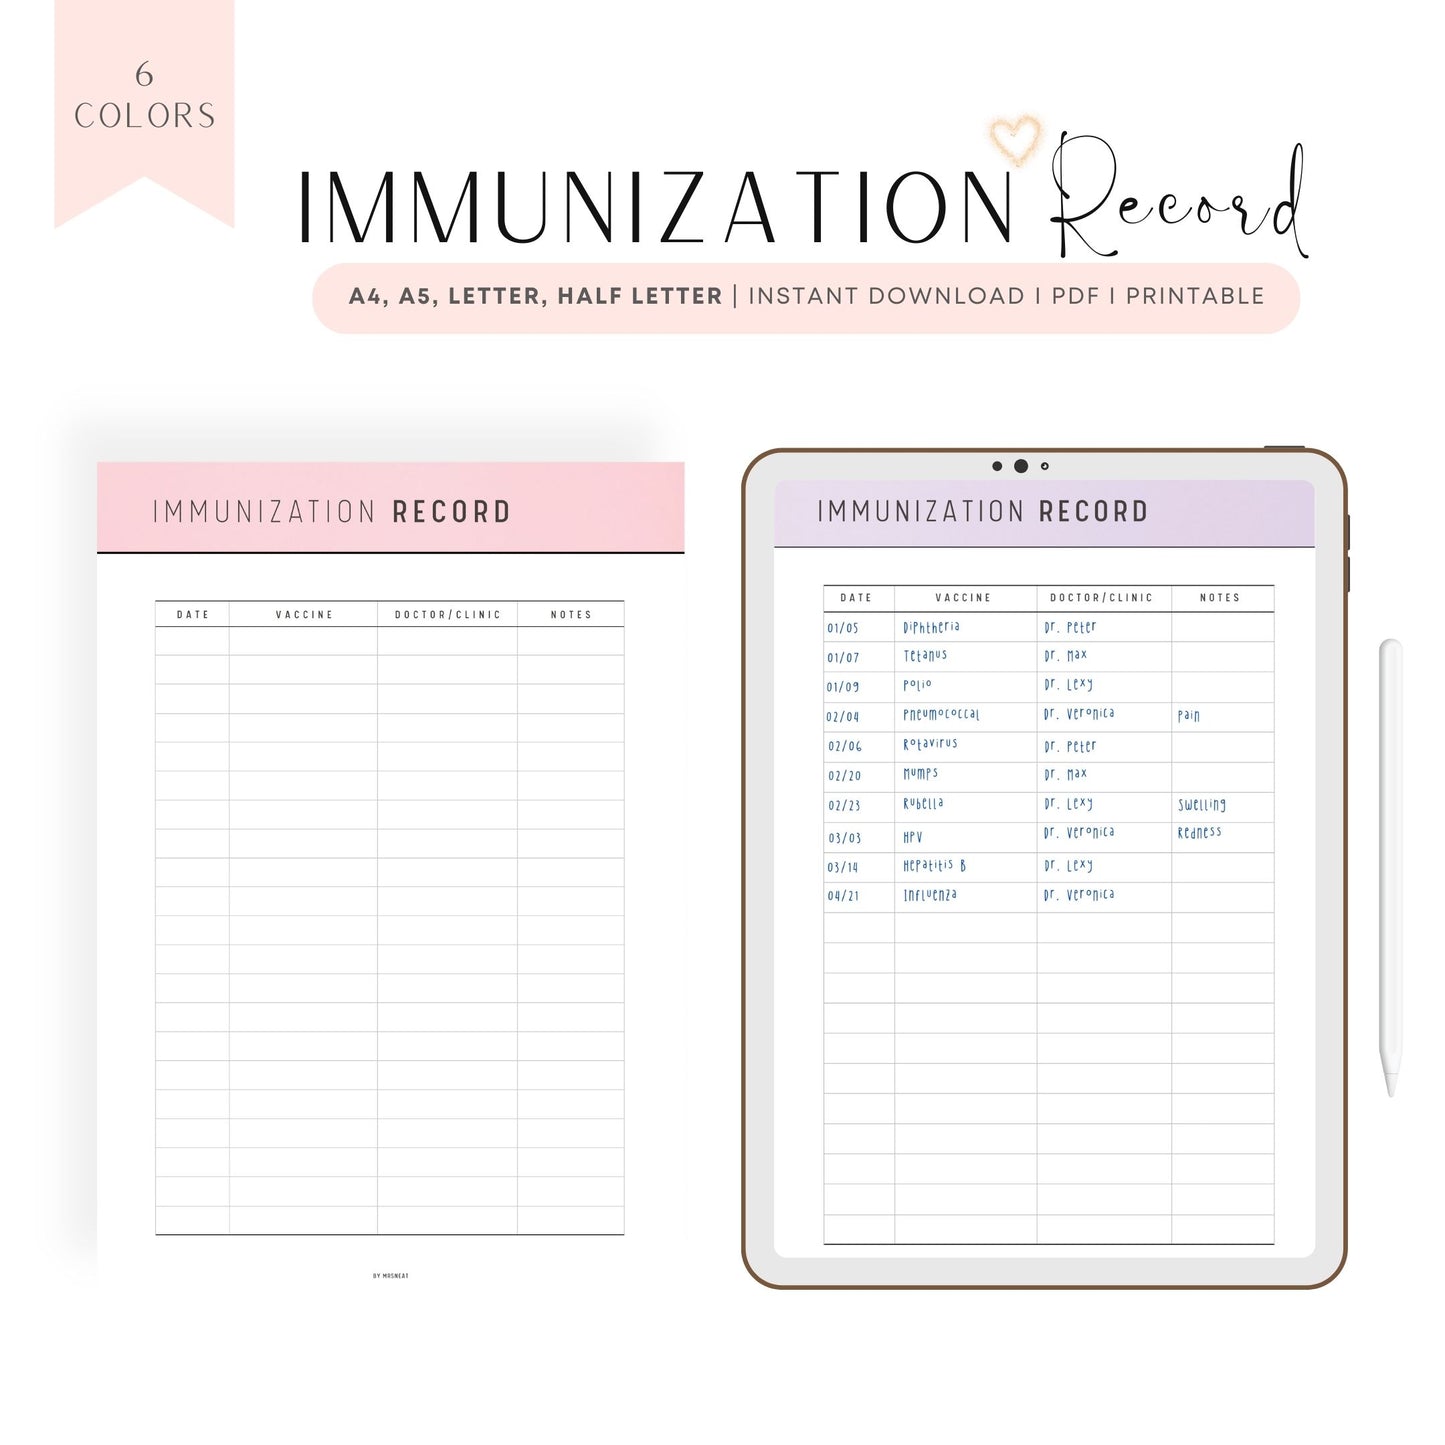 Printable Immunization Record